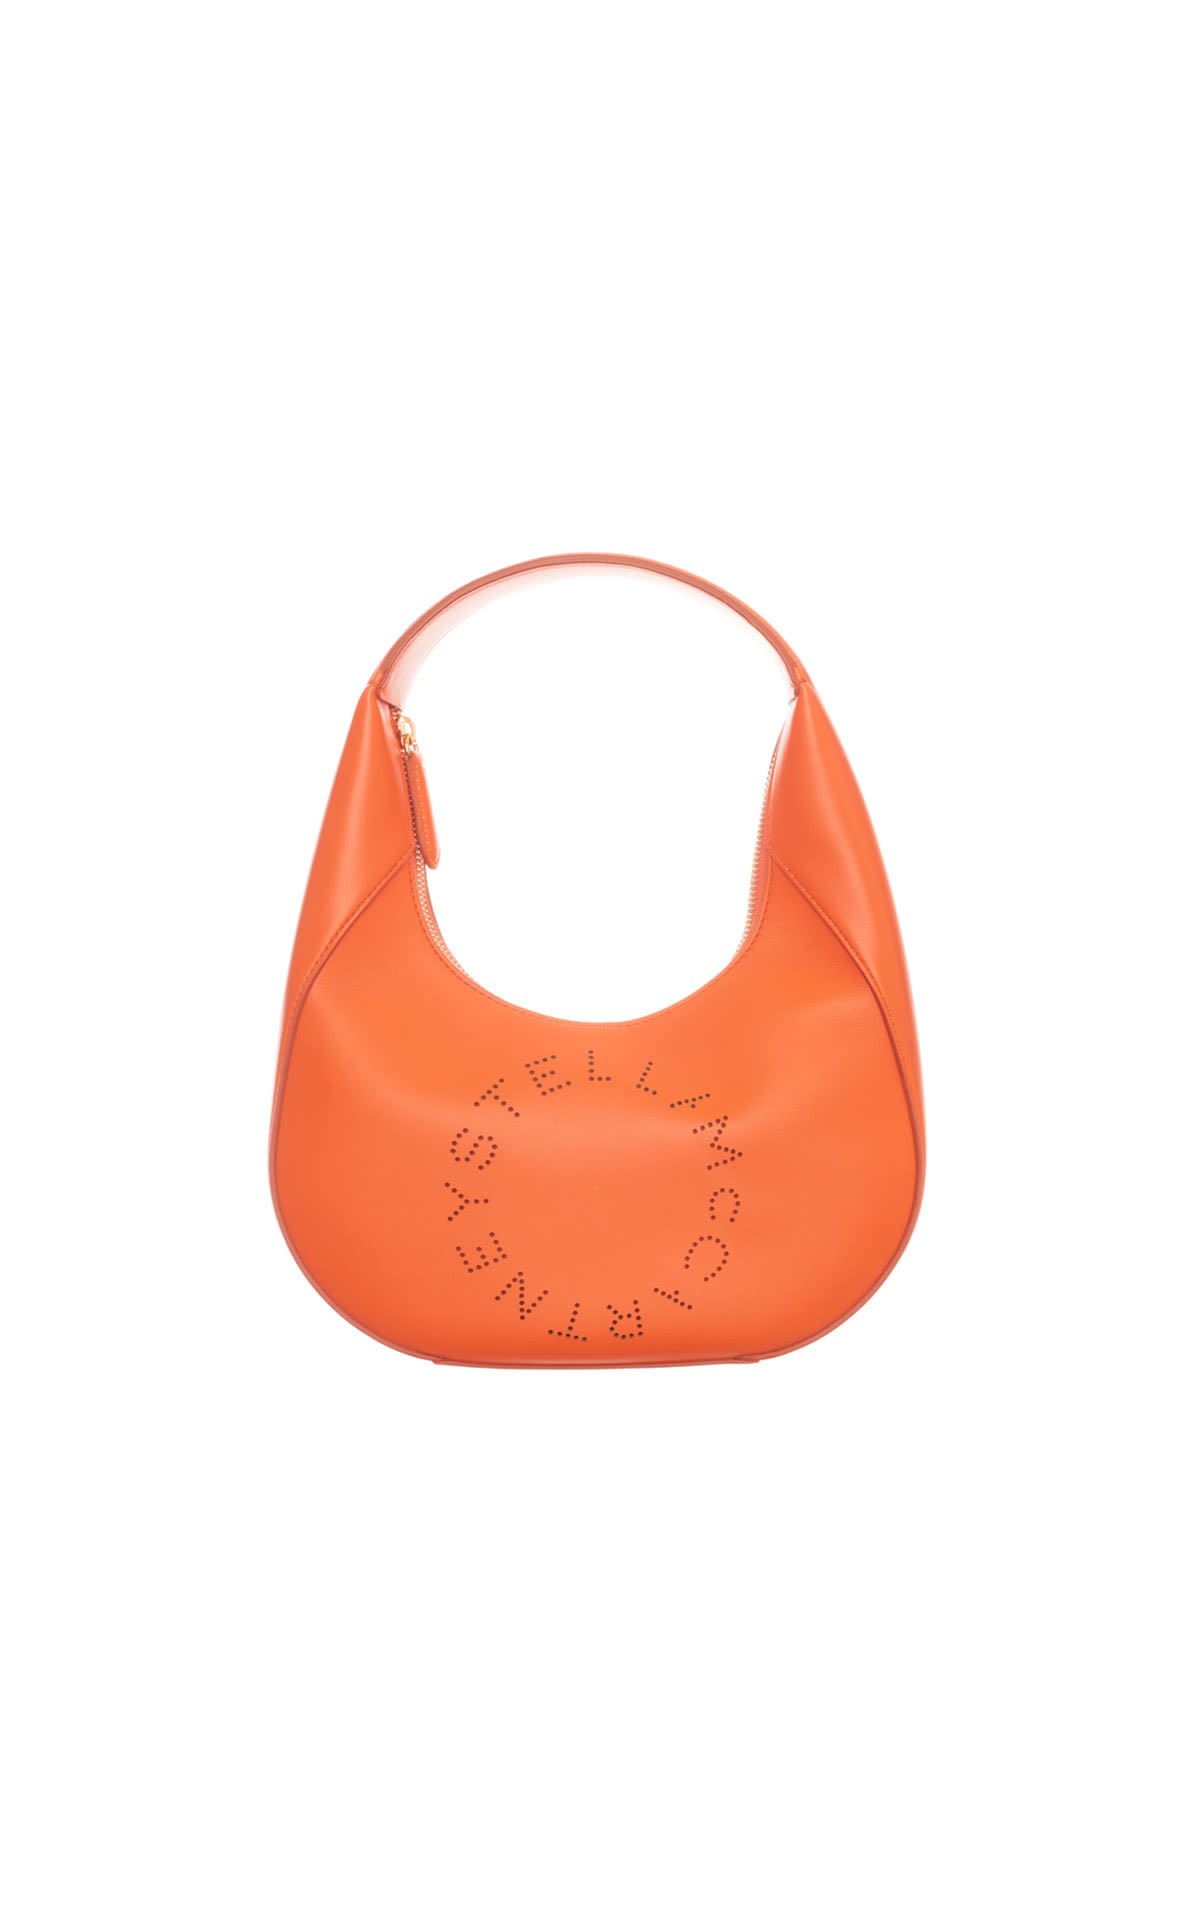 Stella McCartney Small shoulder bag from Bicester Village